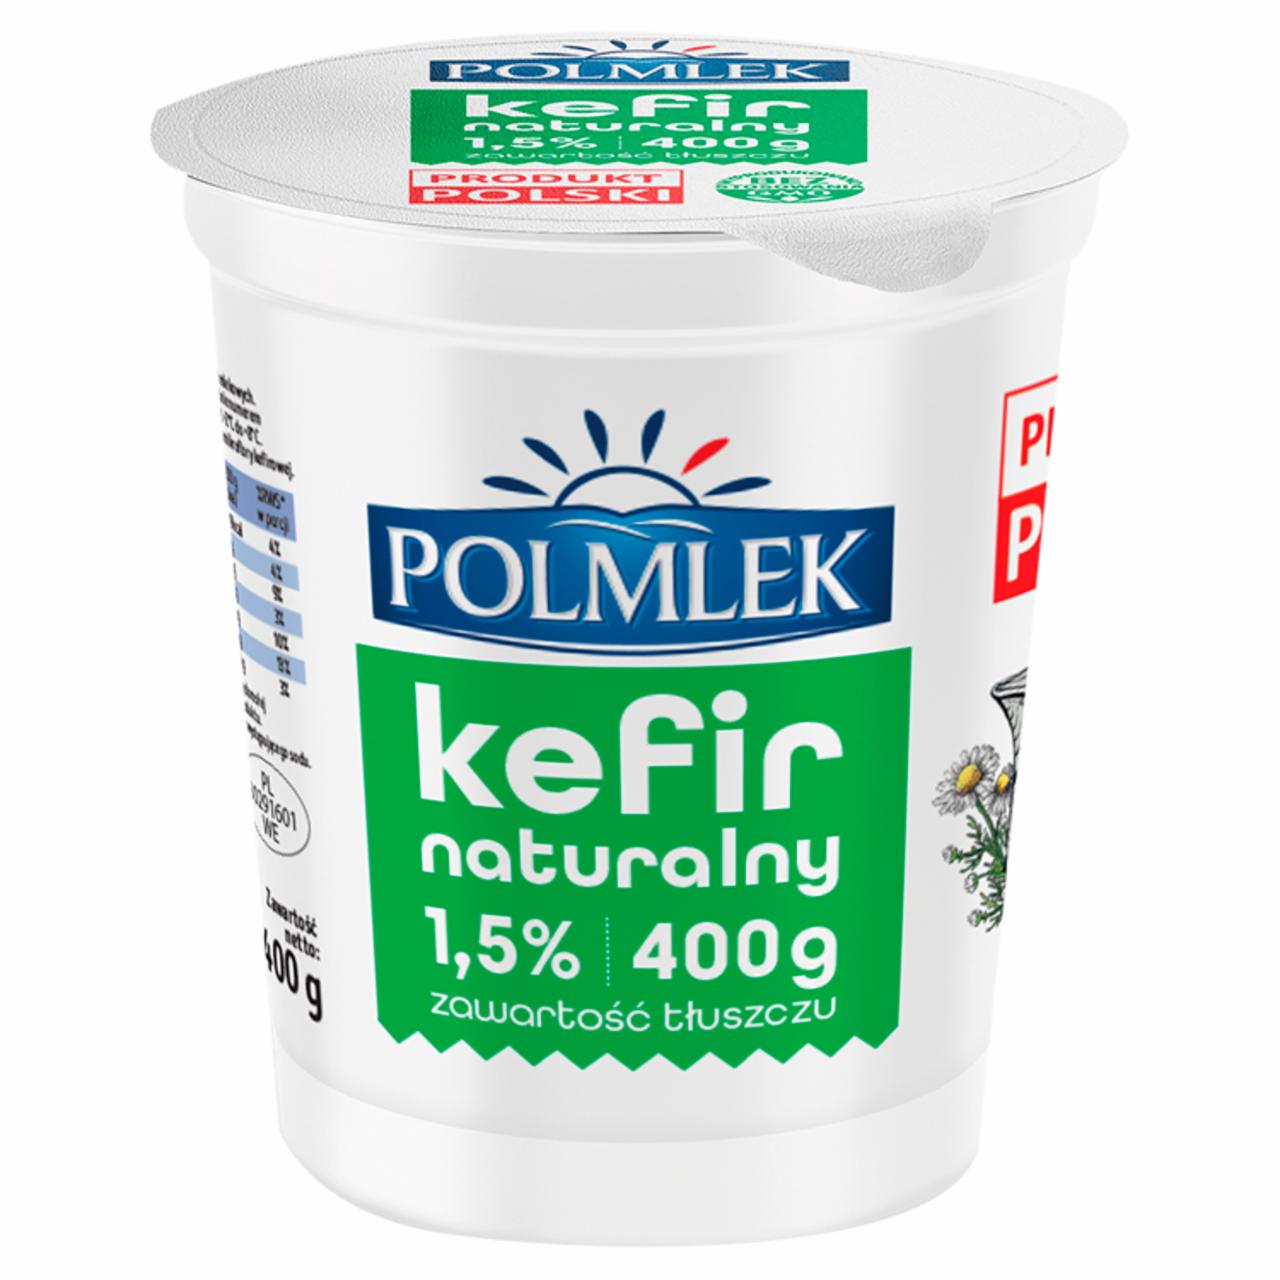 Zdjęcia - Polmlek Kefir naturalny 1,5% 400 g